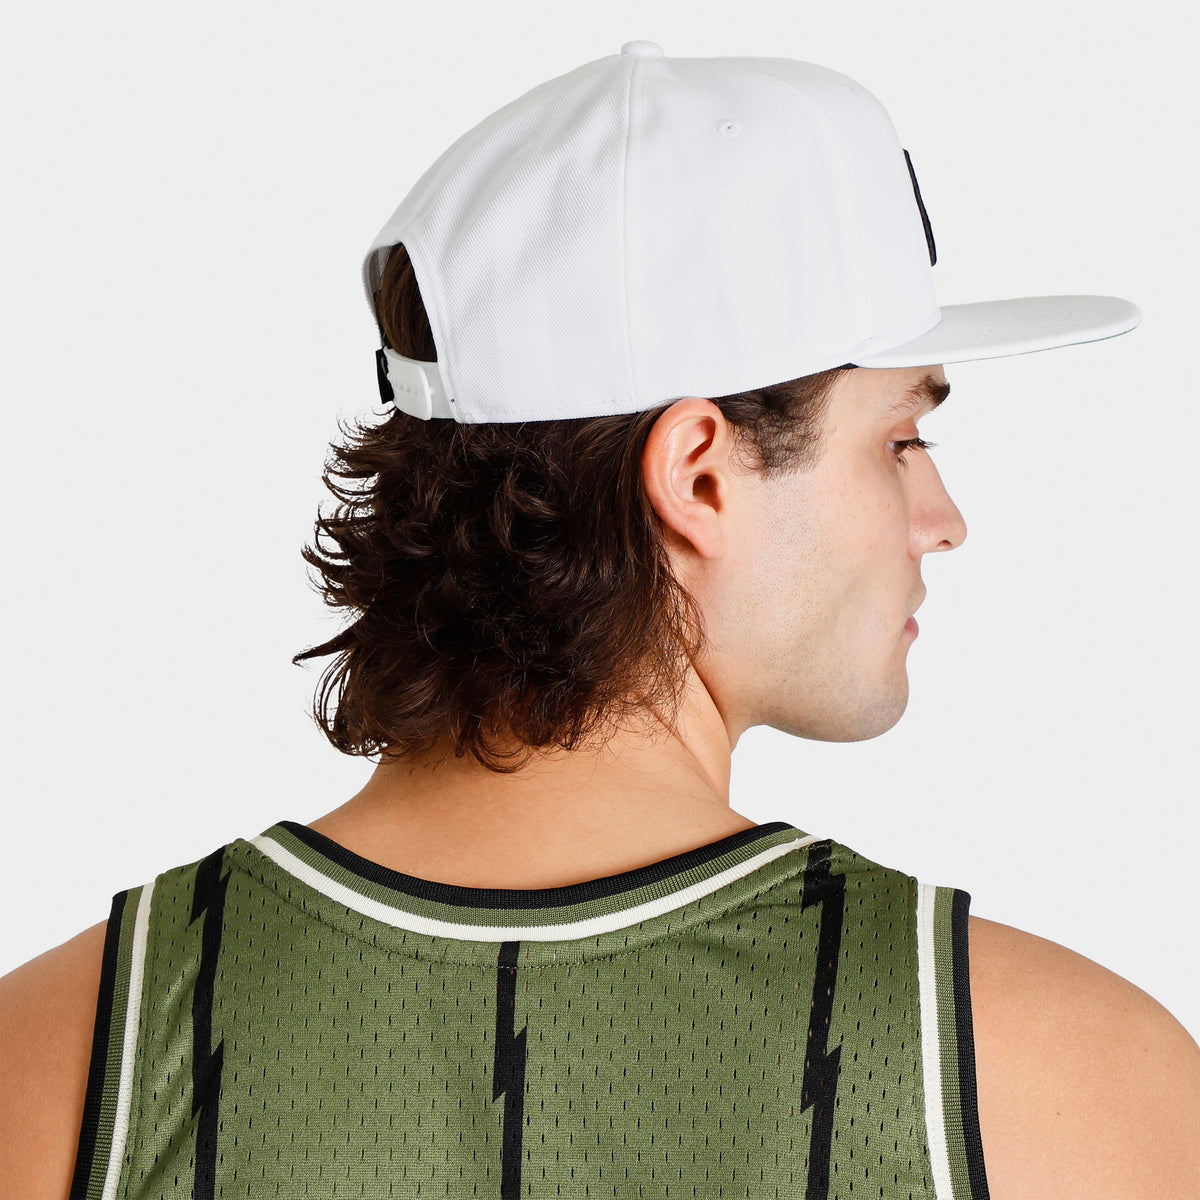 Men's Nike Black Pro Futura Adjustable Snapback Hat - OSFA 